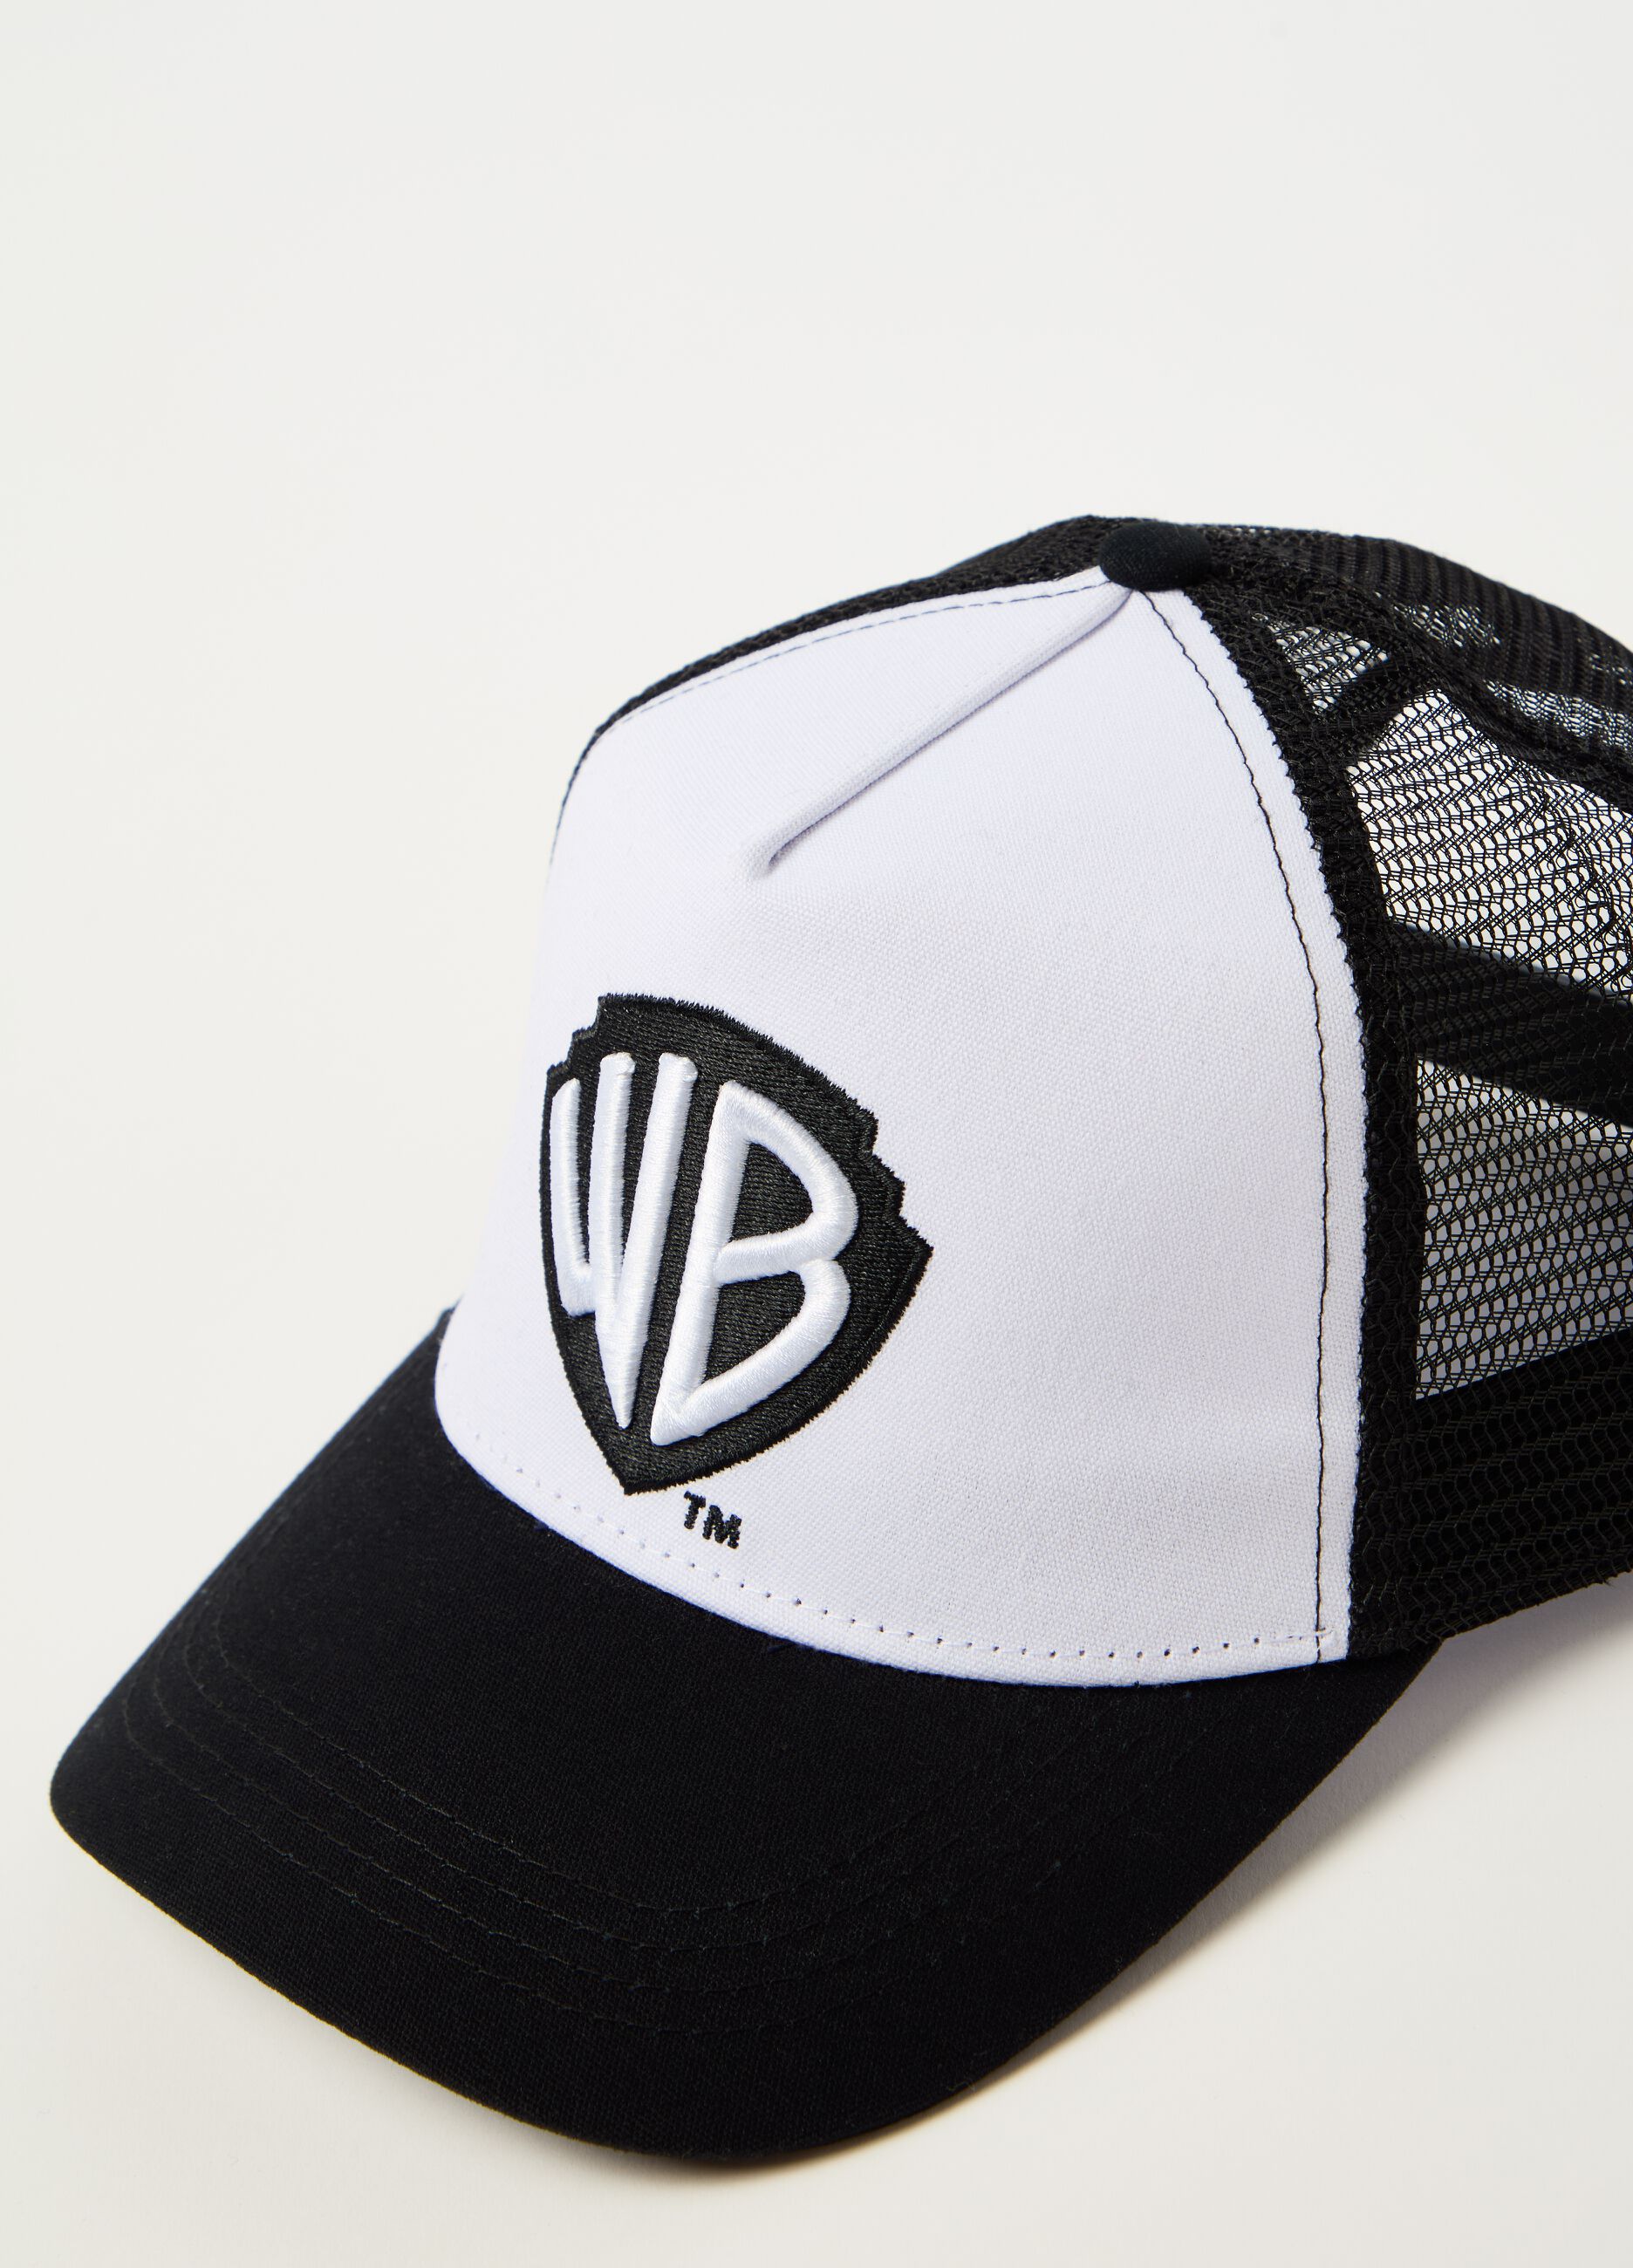 Baseball cap with Warner Bros logo